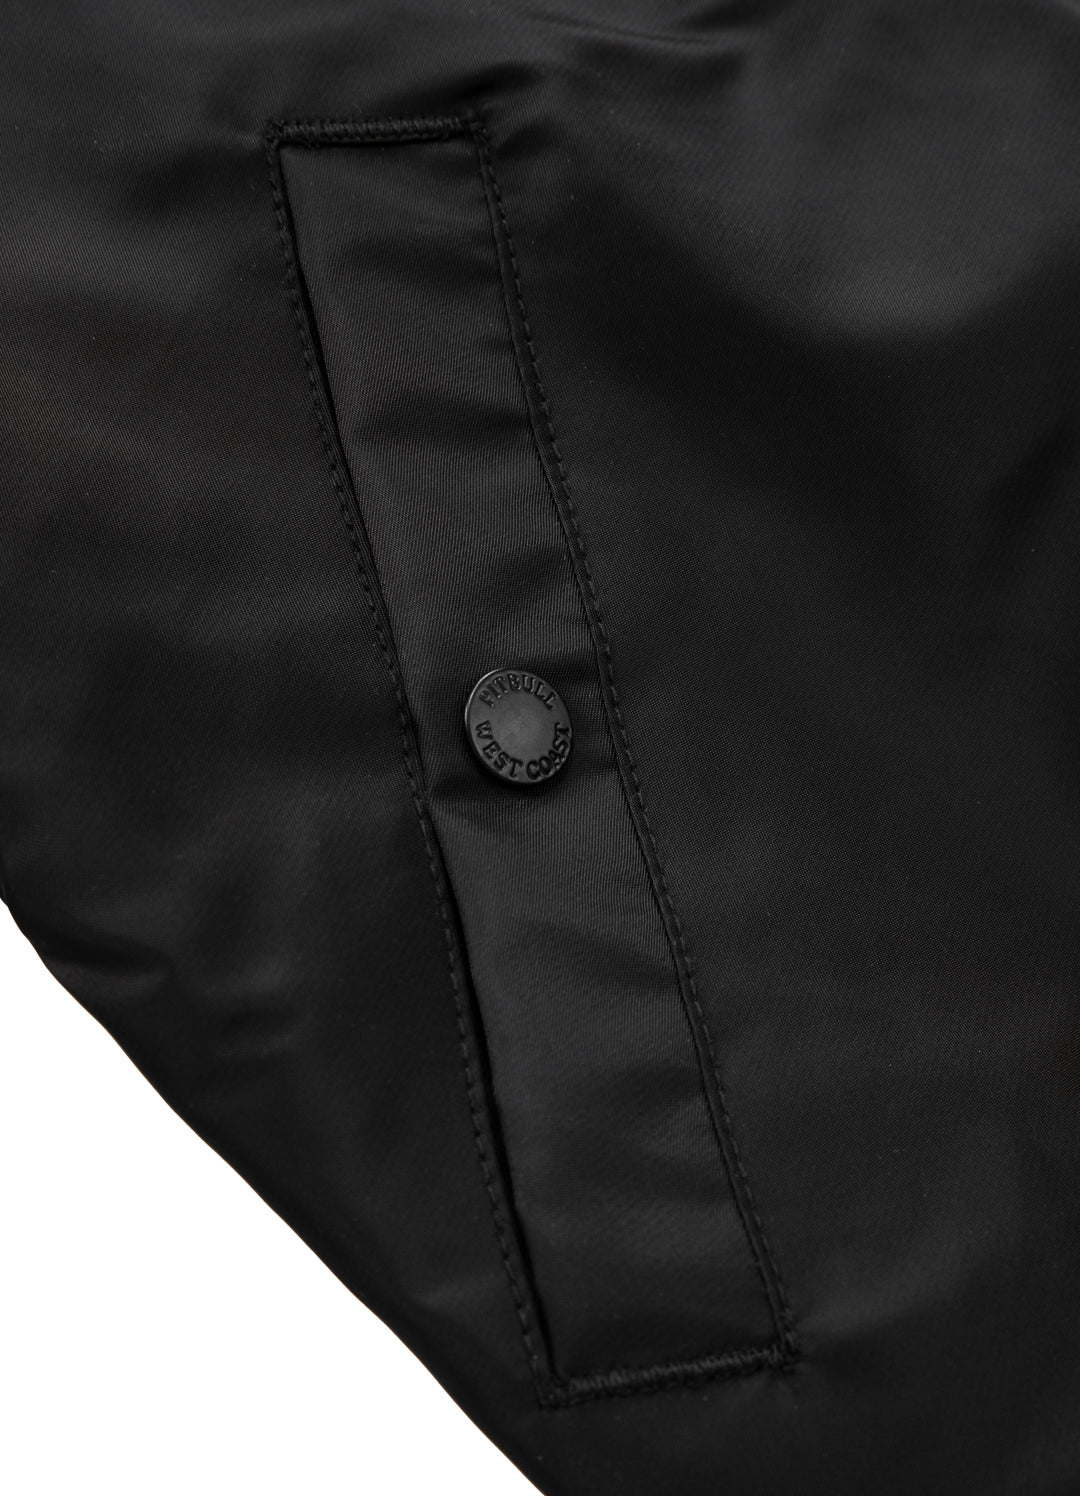 STARWOOD Black Hooded Jacket.